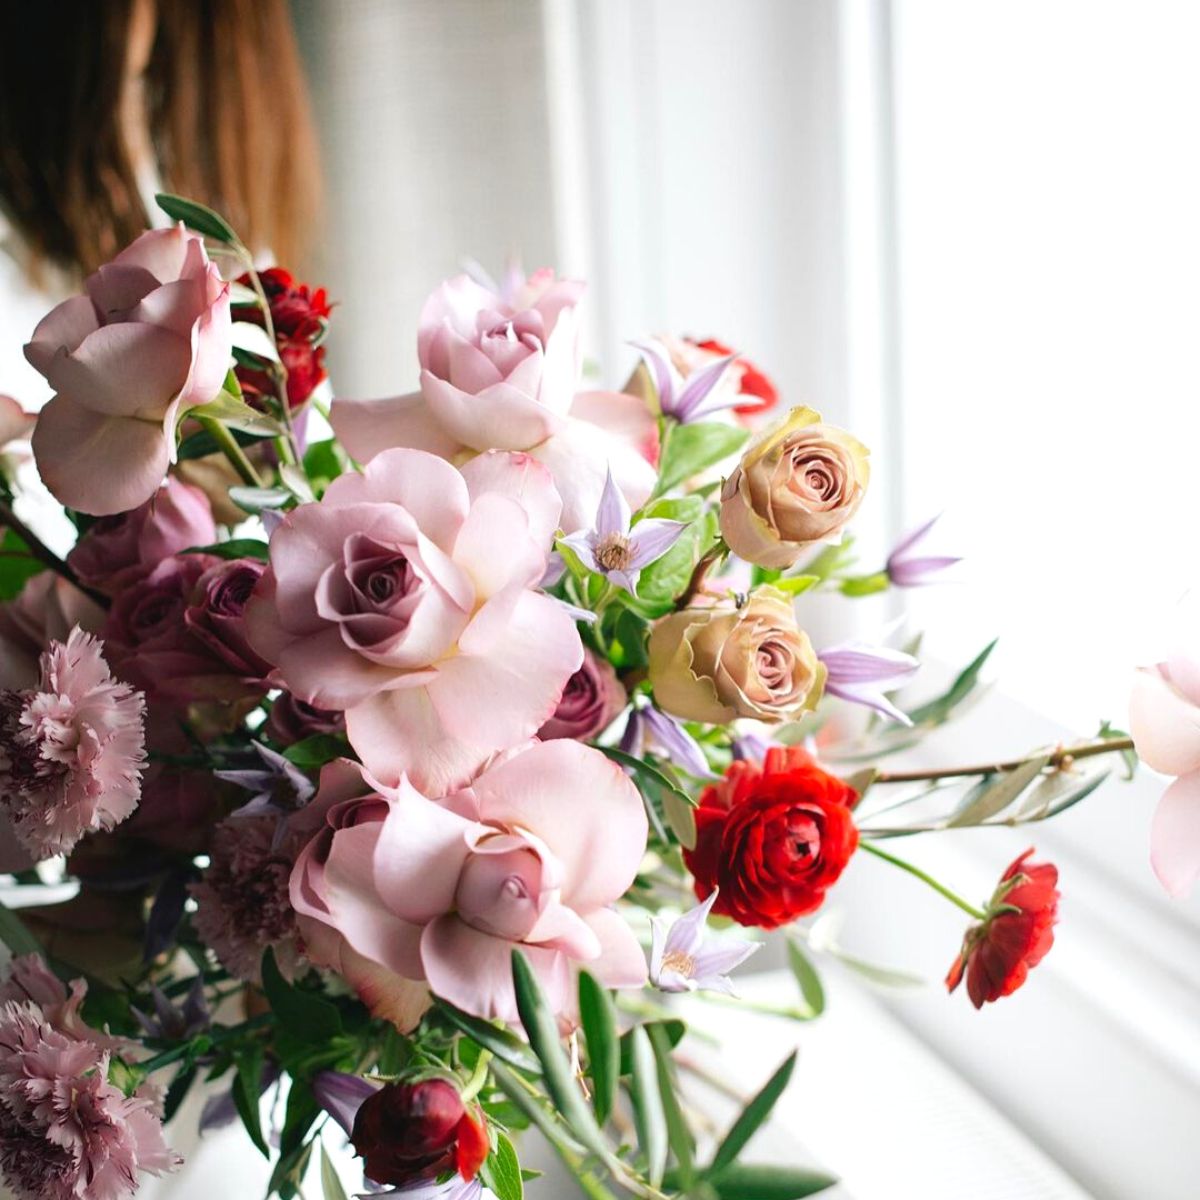 Types of floral arrangements by Nikki Tibbels